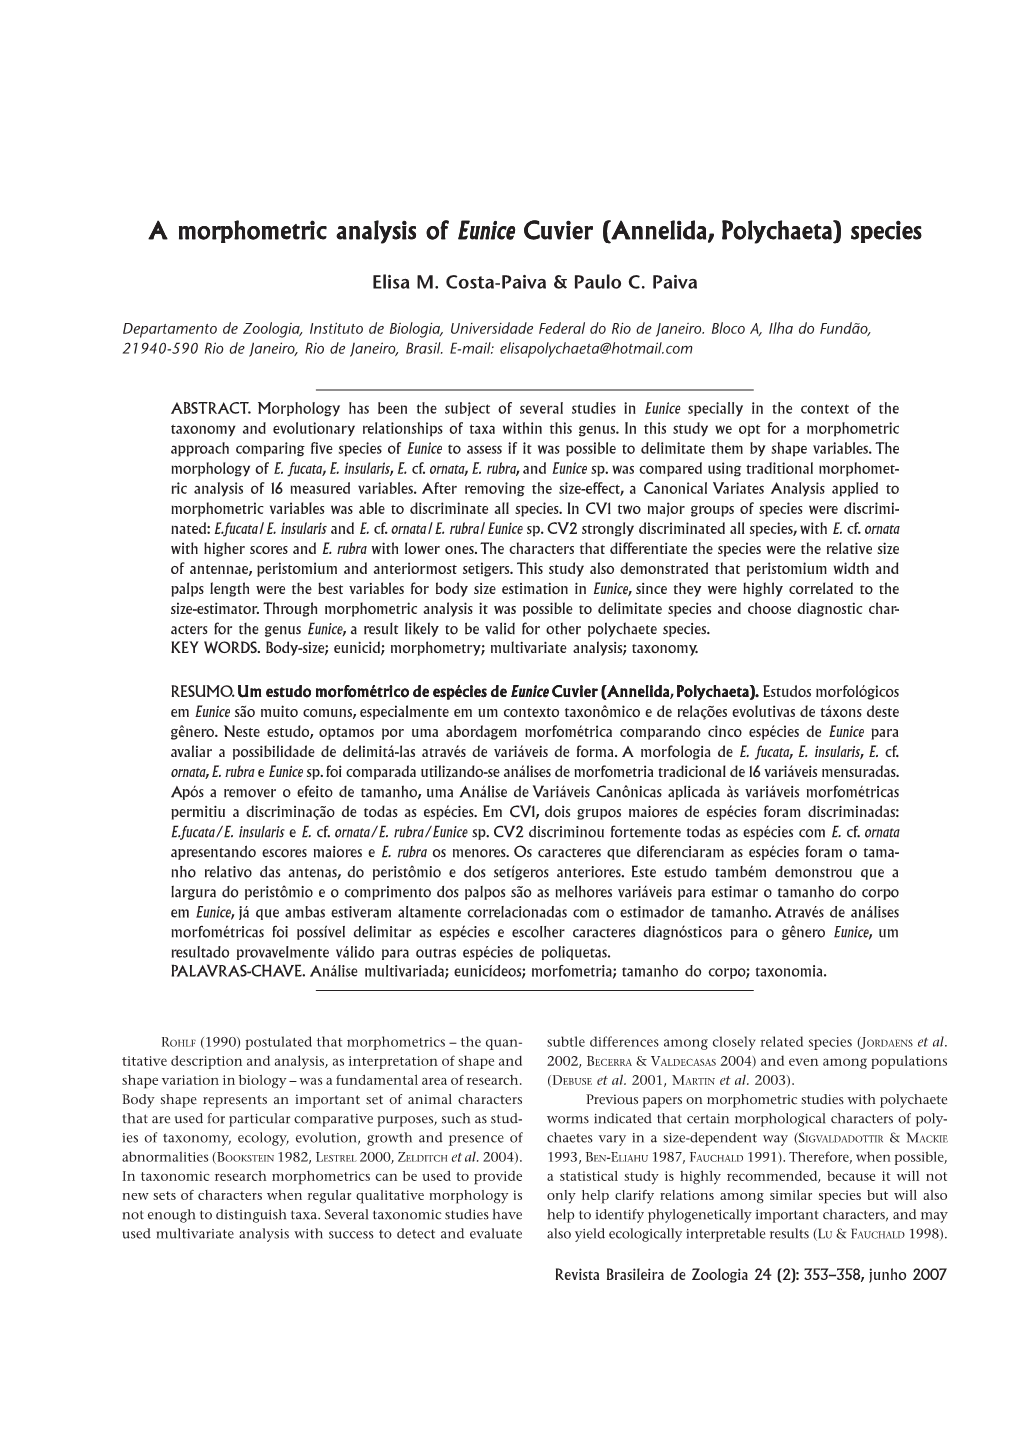 A Morphometric Analysis of Eunice Cuvier (Annelida, Polychaeta) Species